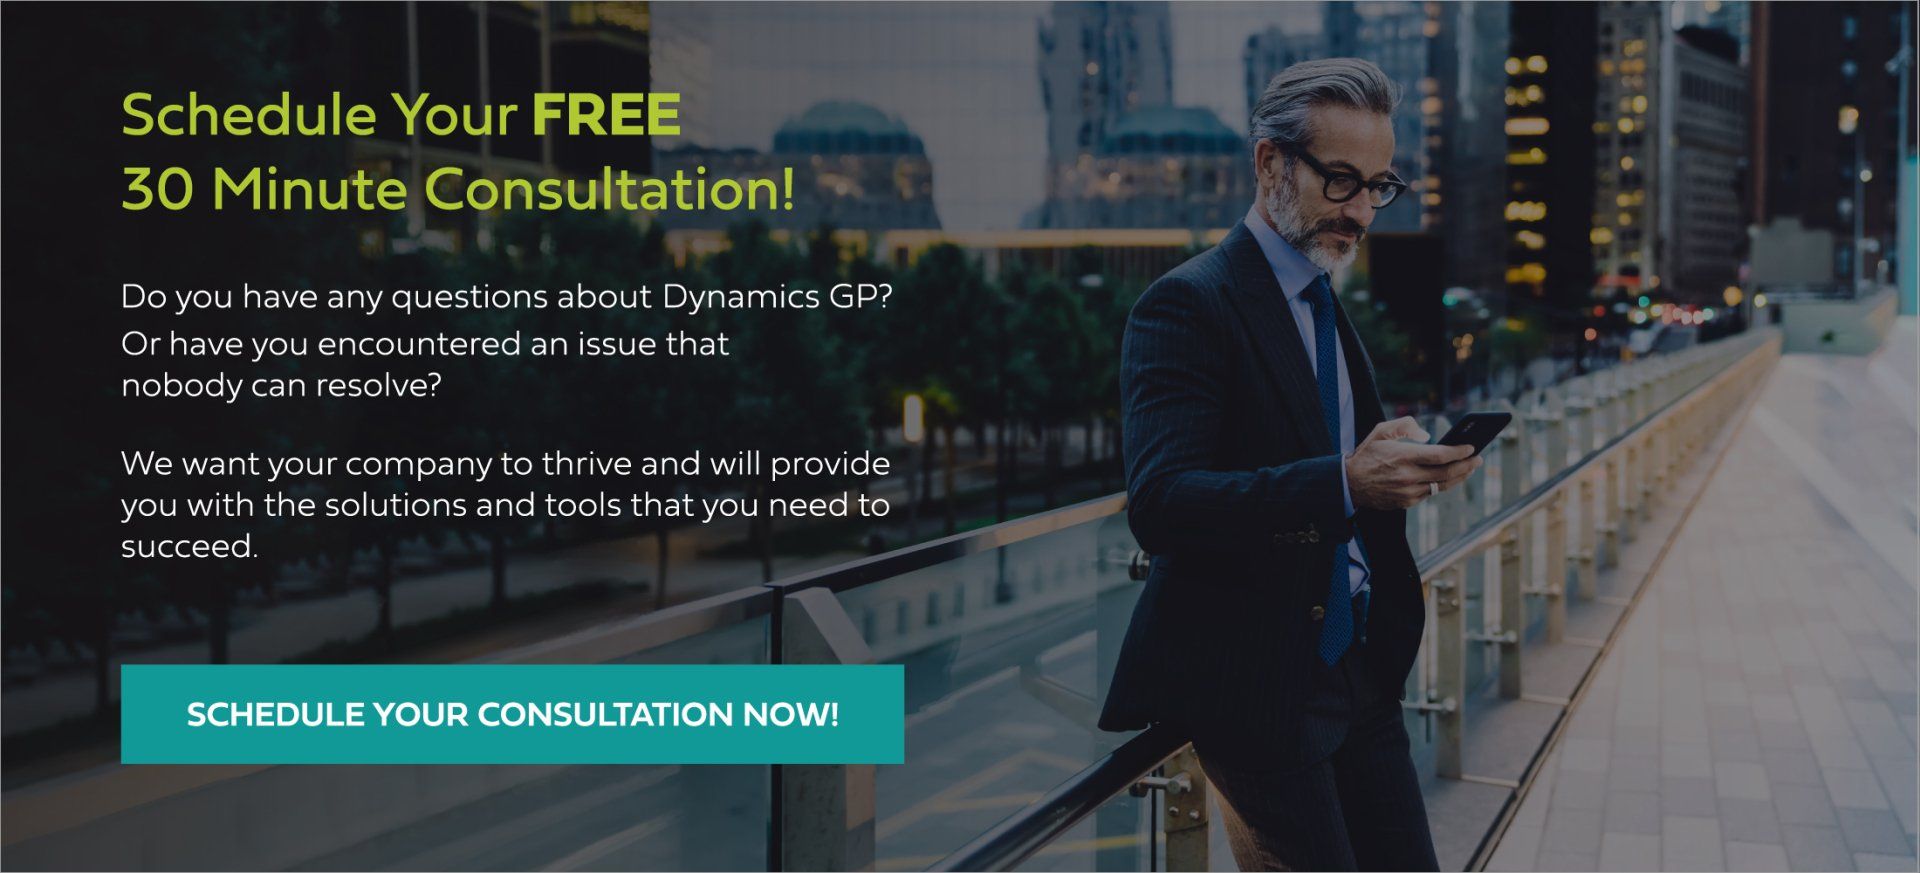 Dynamic GP Consultation